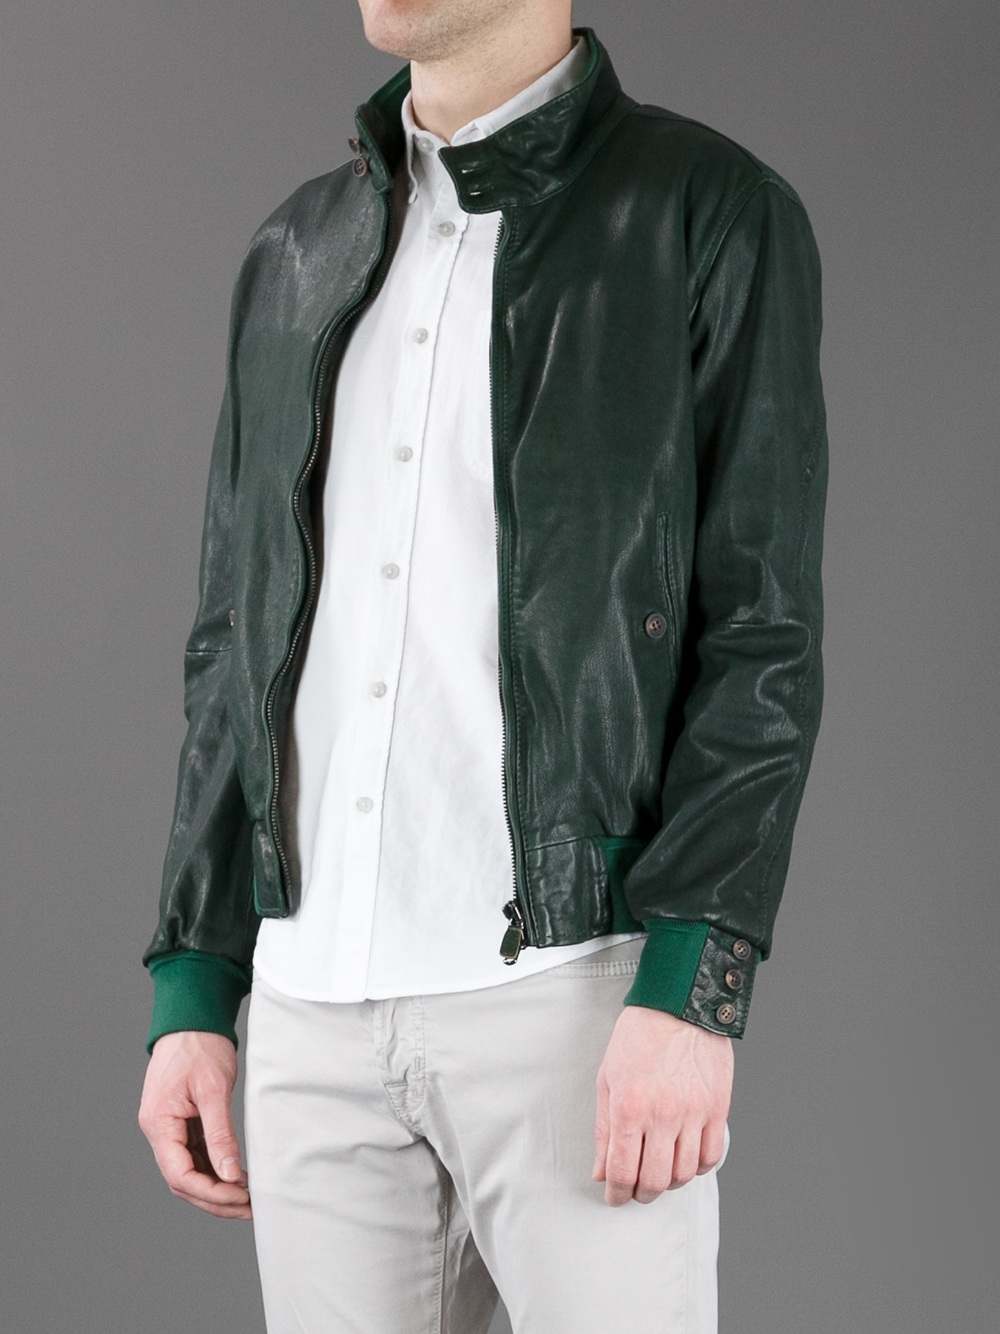 Jacob Cohen Leather Bomber Jacker in Green for Men - Lyst